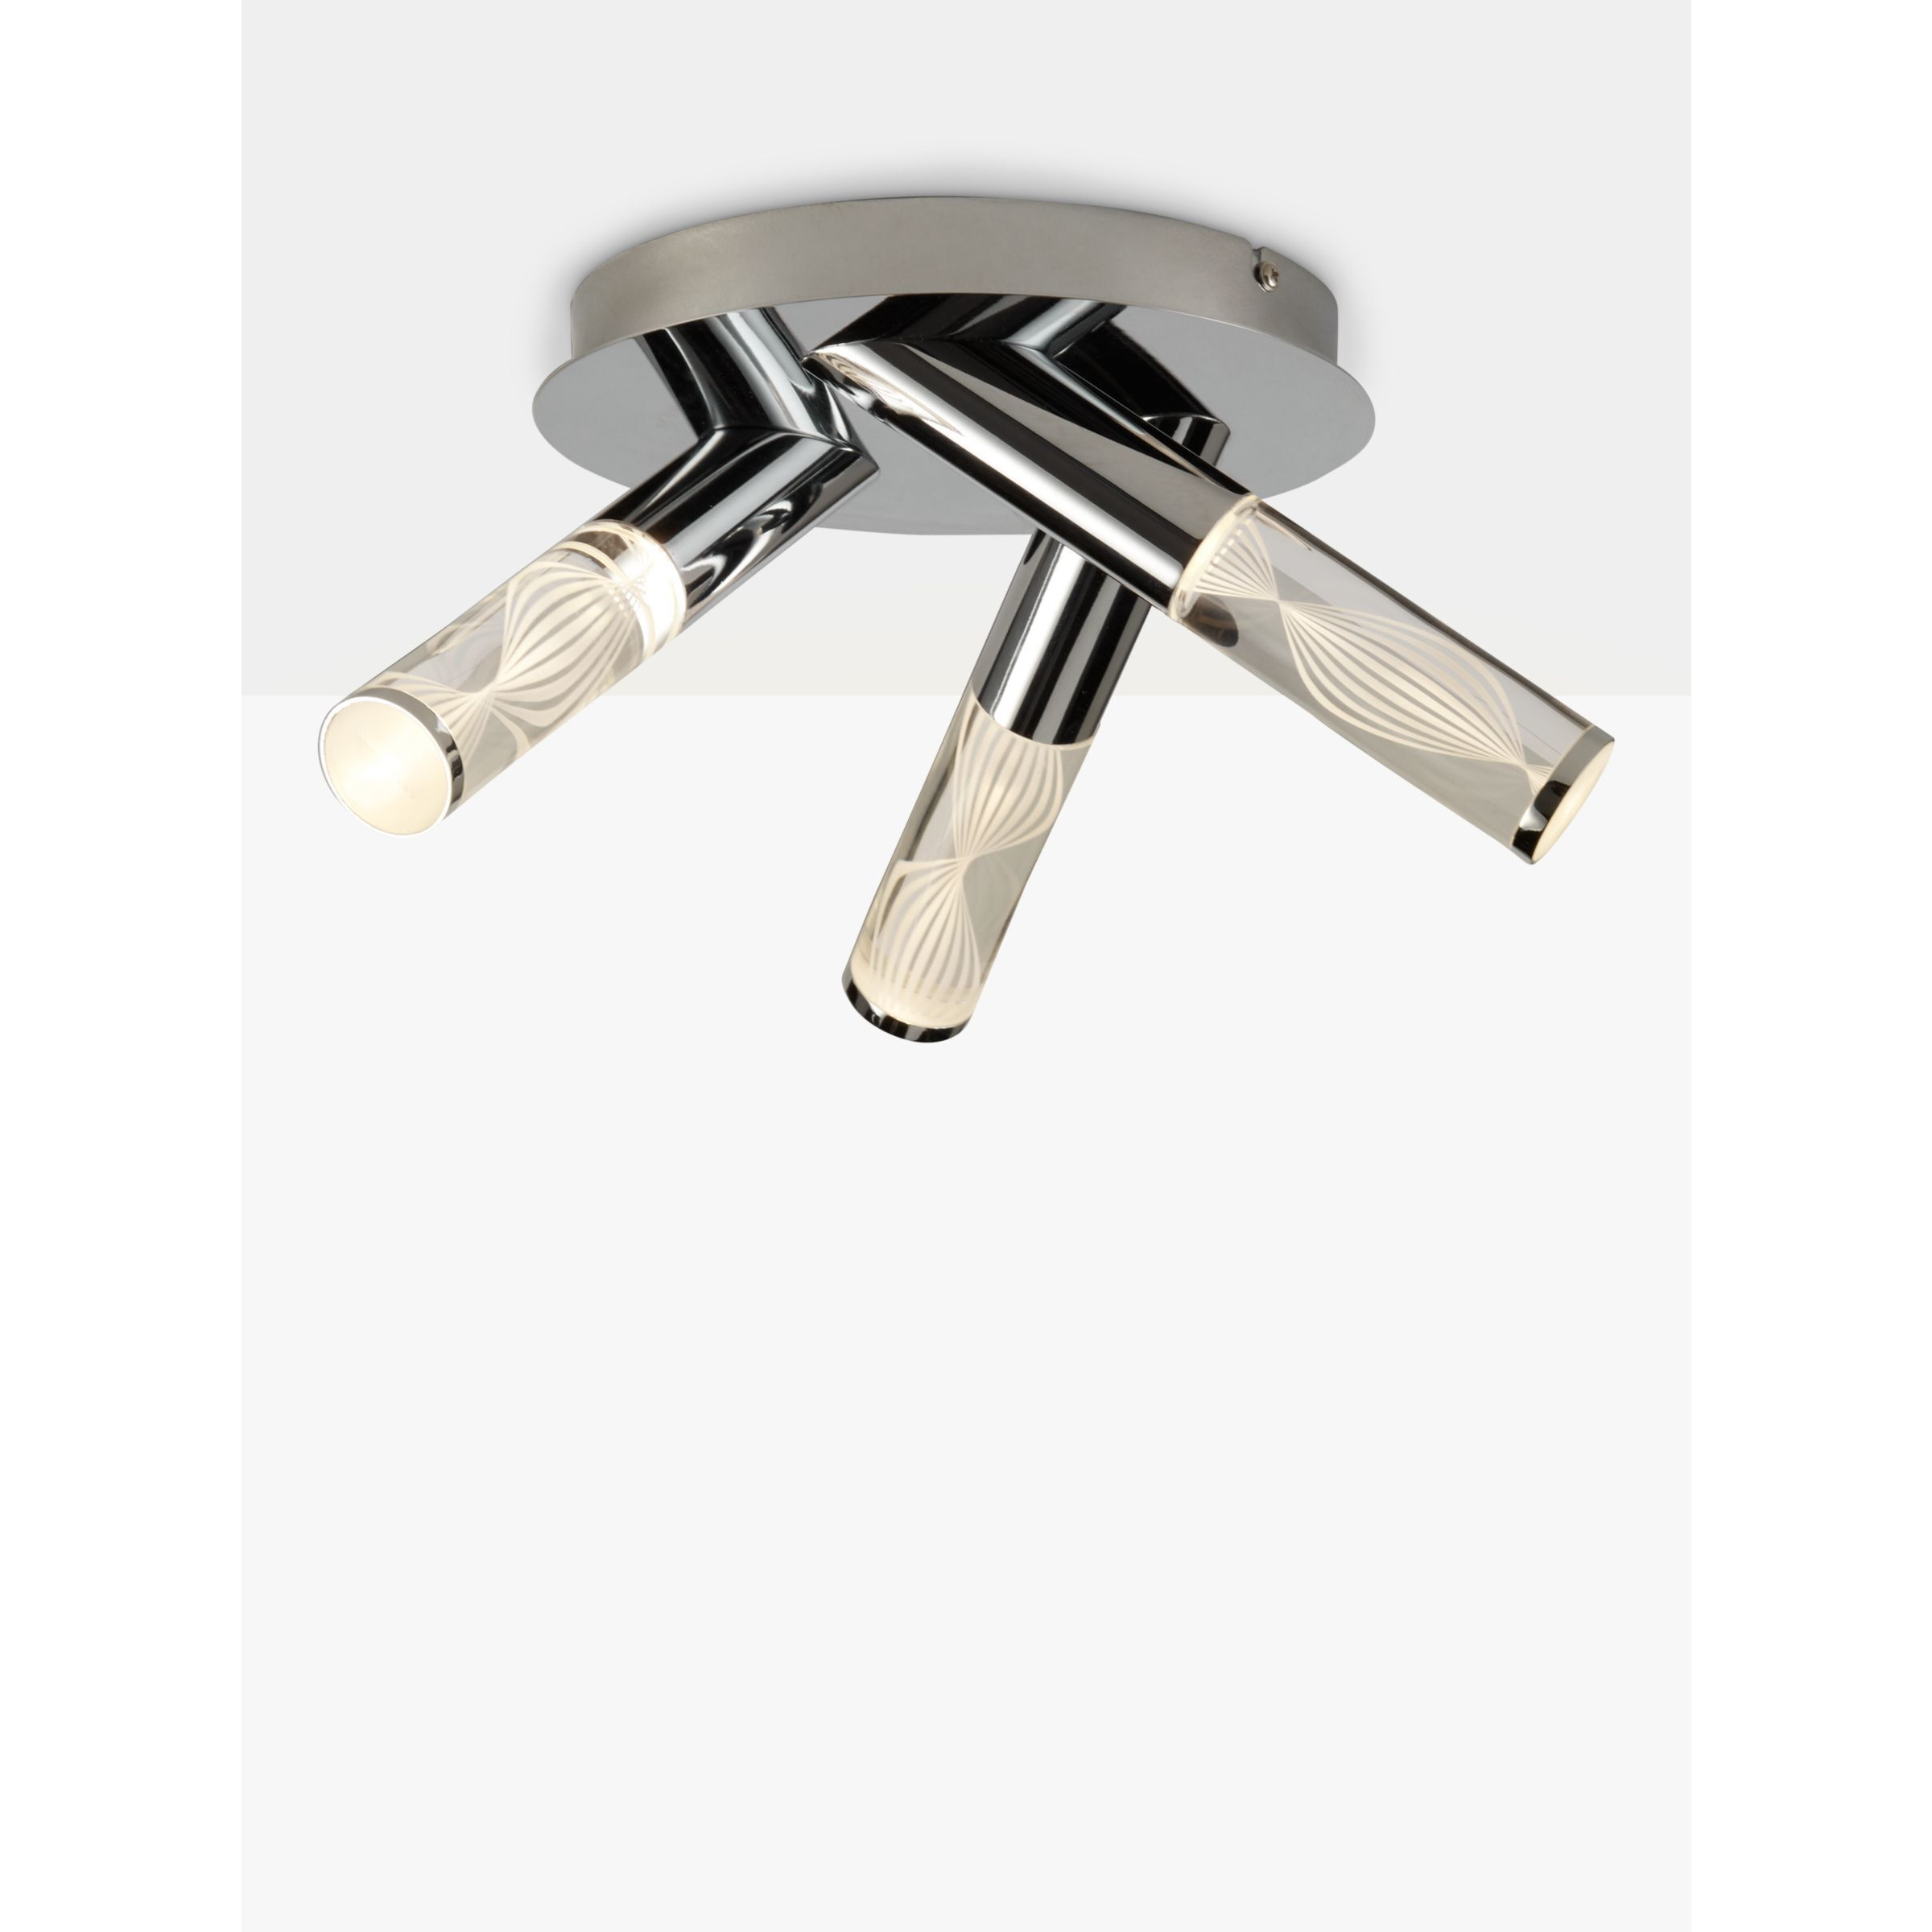 John Lewis Oslo LED 3 Arm Bathroom Ceiling Plate, Chrome - image 1